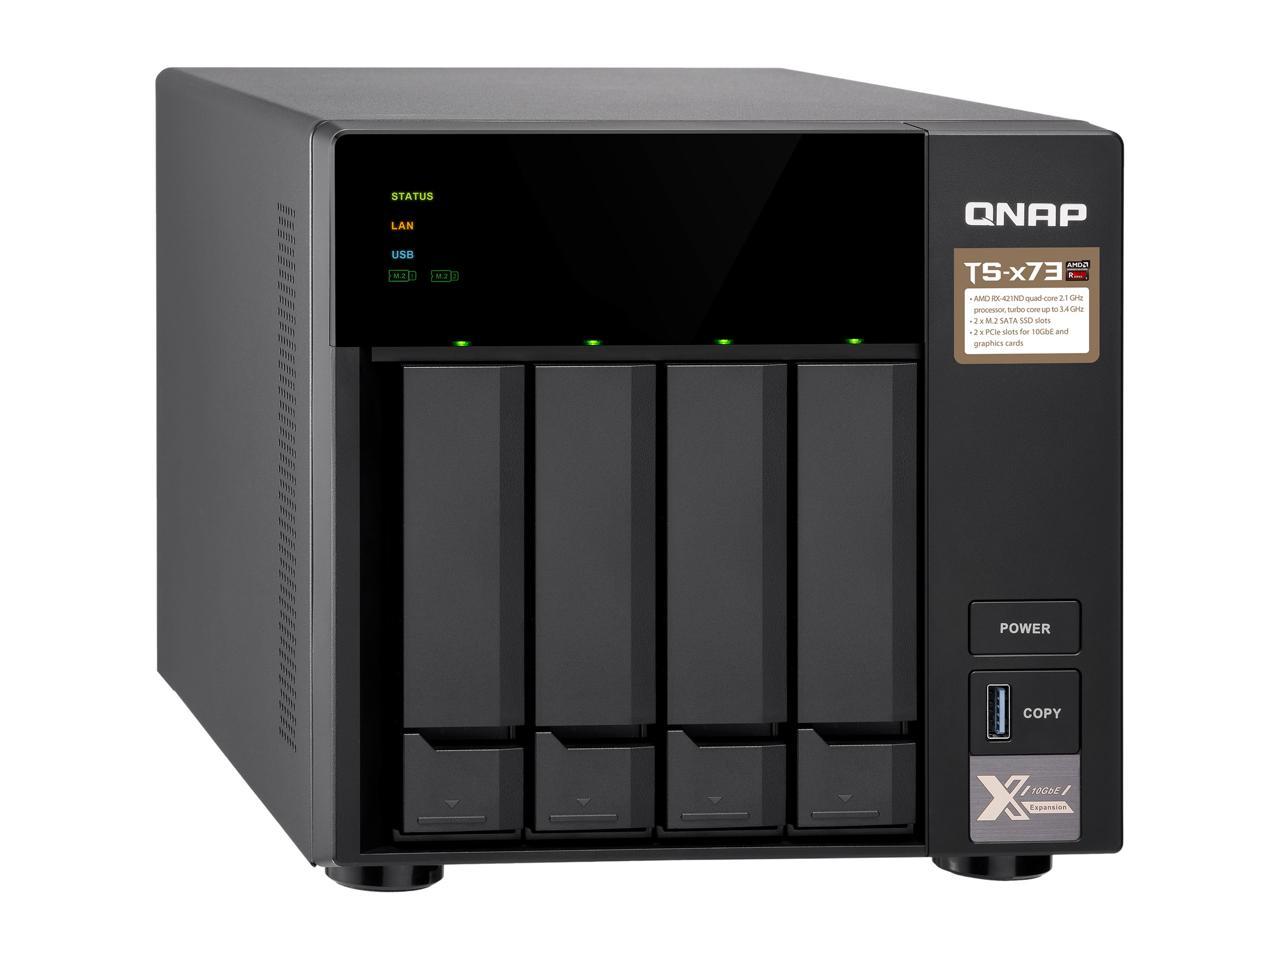 QNAP TS-473-4G-US 4-Bay NAS/iSCSI IP-SAN, AMD R Series Quad-core 2.1GHz, 4GB RAM, 10G-Ready